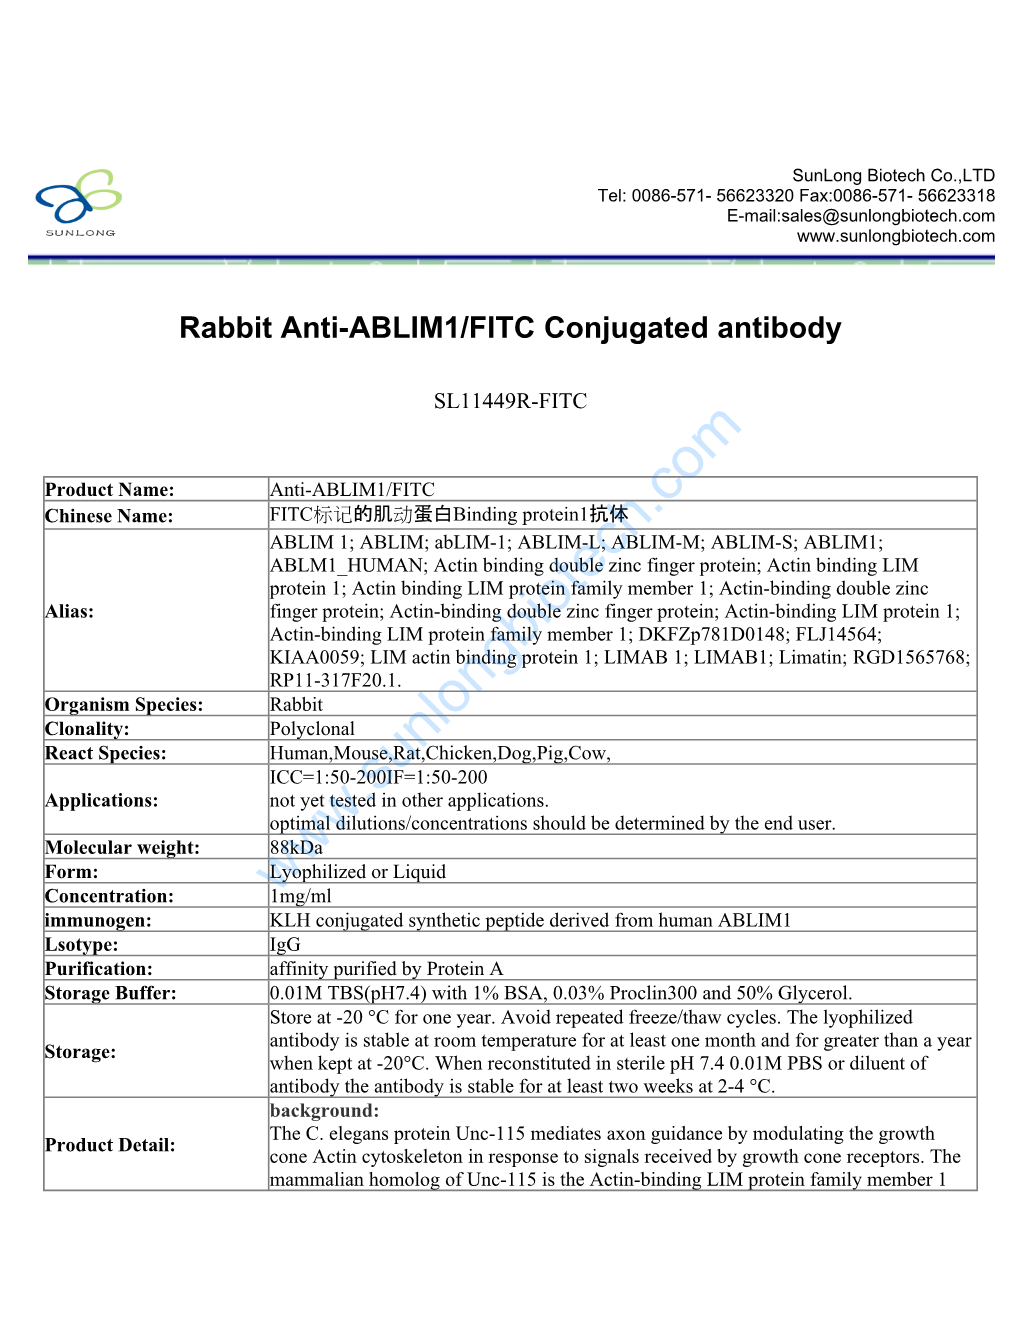 Rabbit Anti-ABLIM1/FITC Conjugated Antibody-SL11449R-FITC